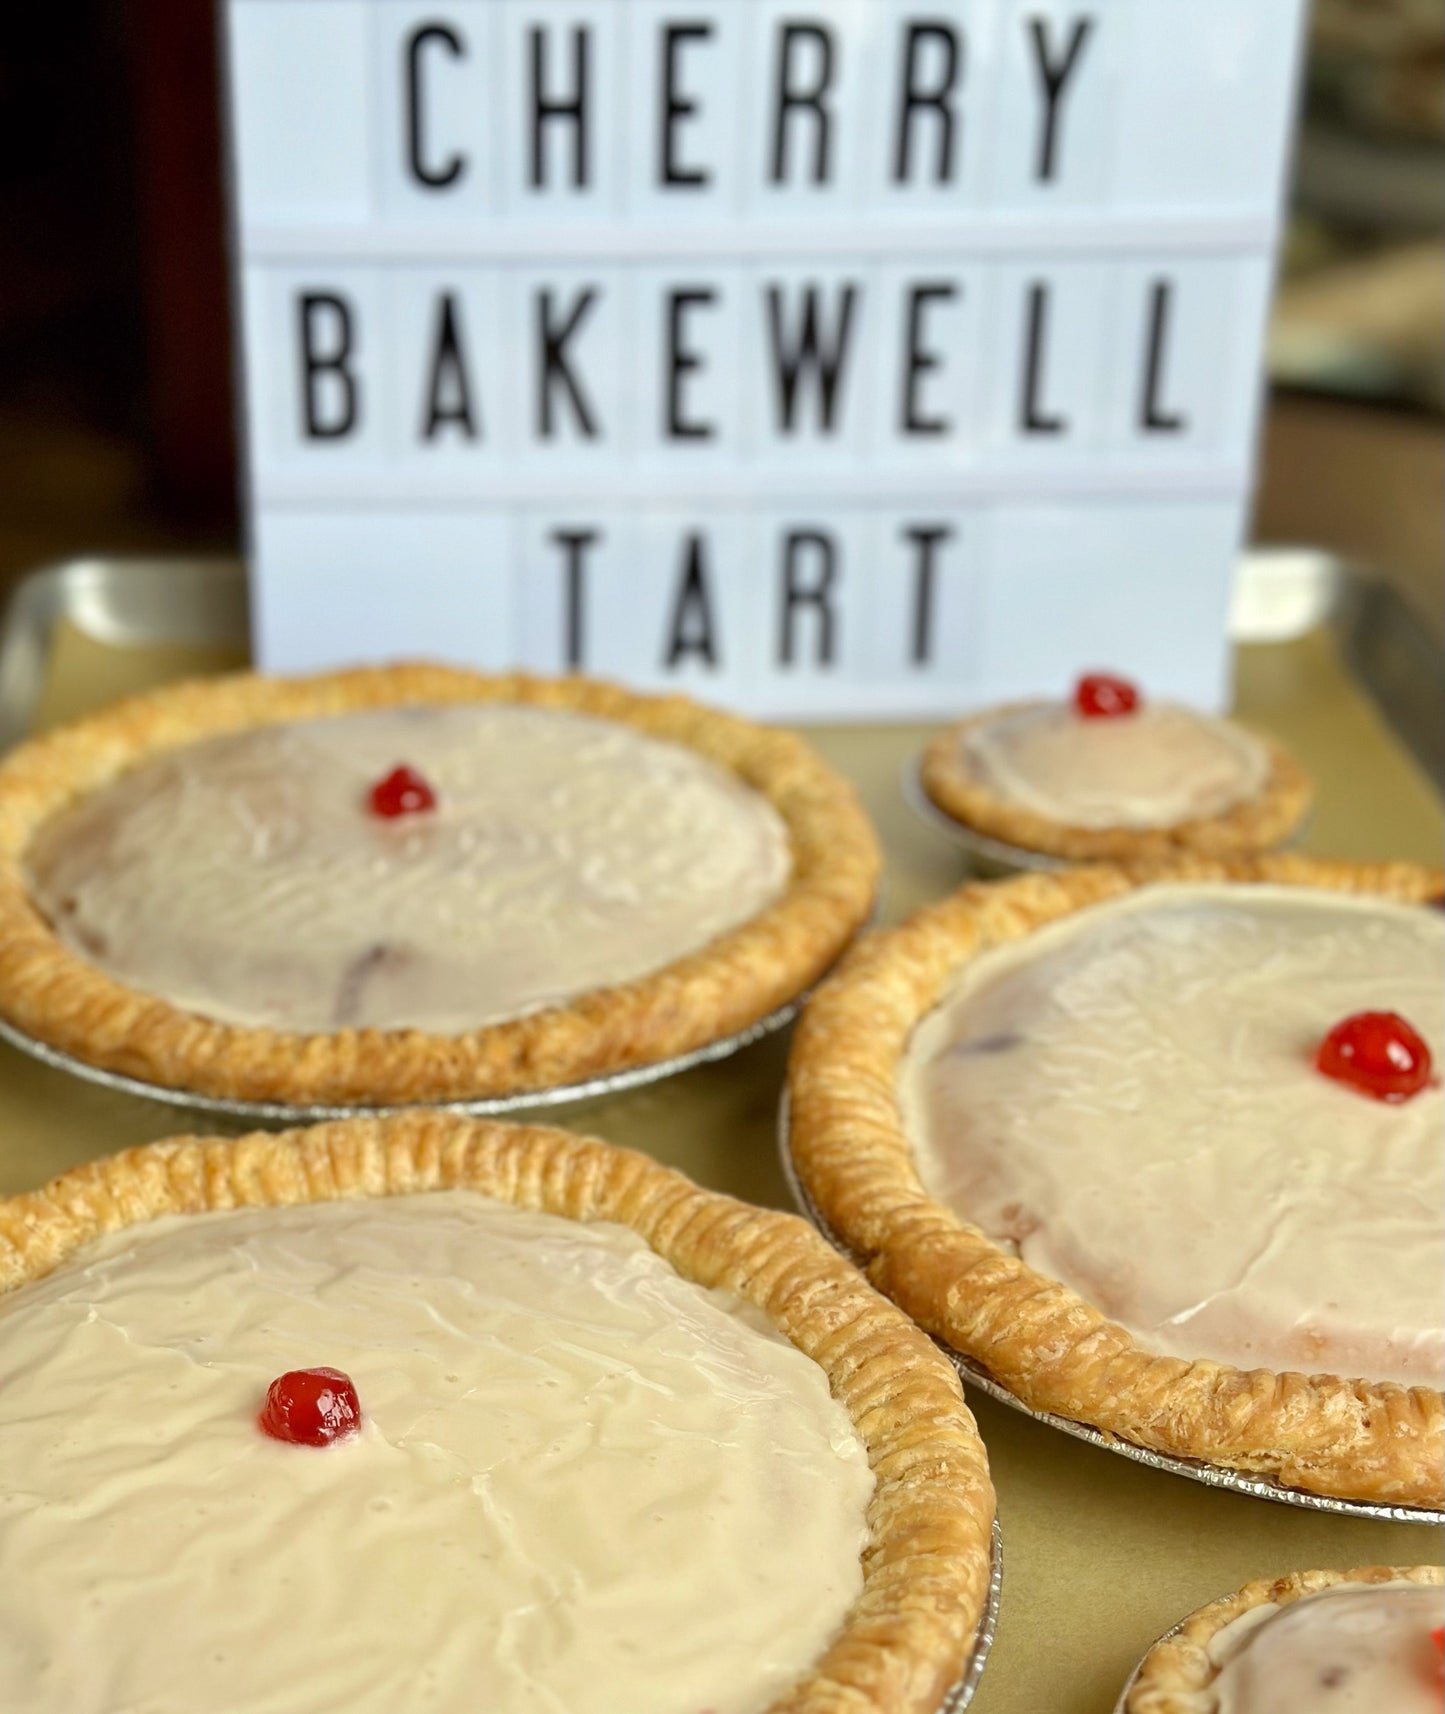 Pie - Cherry Bakewell Tart with Lemon Glaze - 10”